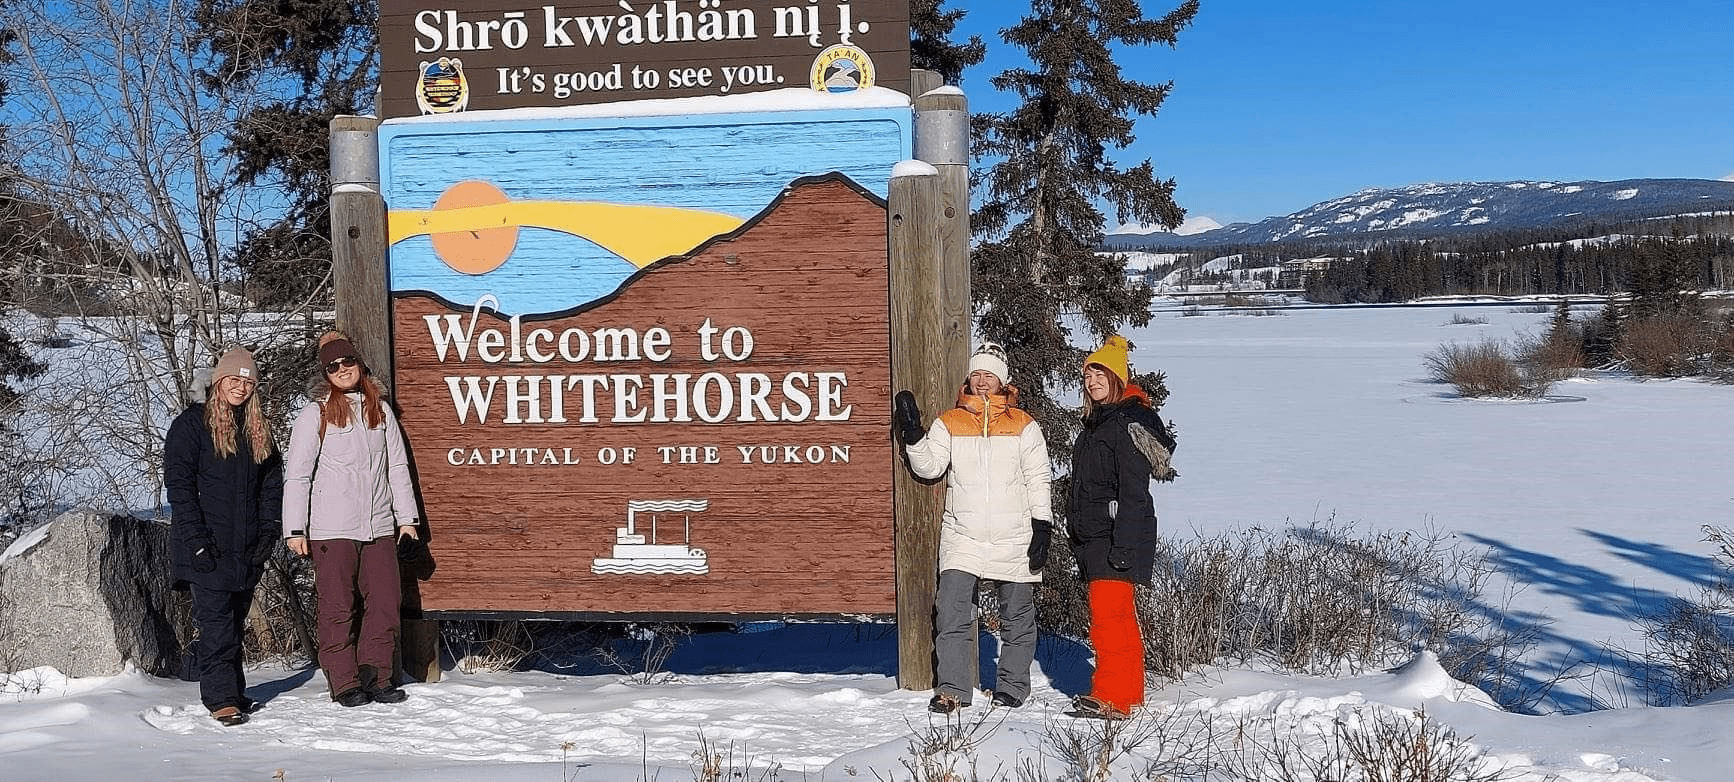 Stagiaires devant une pancarte disant Welcome to WHITEHORSE devant une paysage hivernal